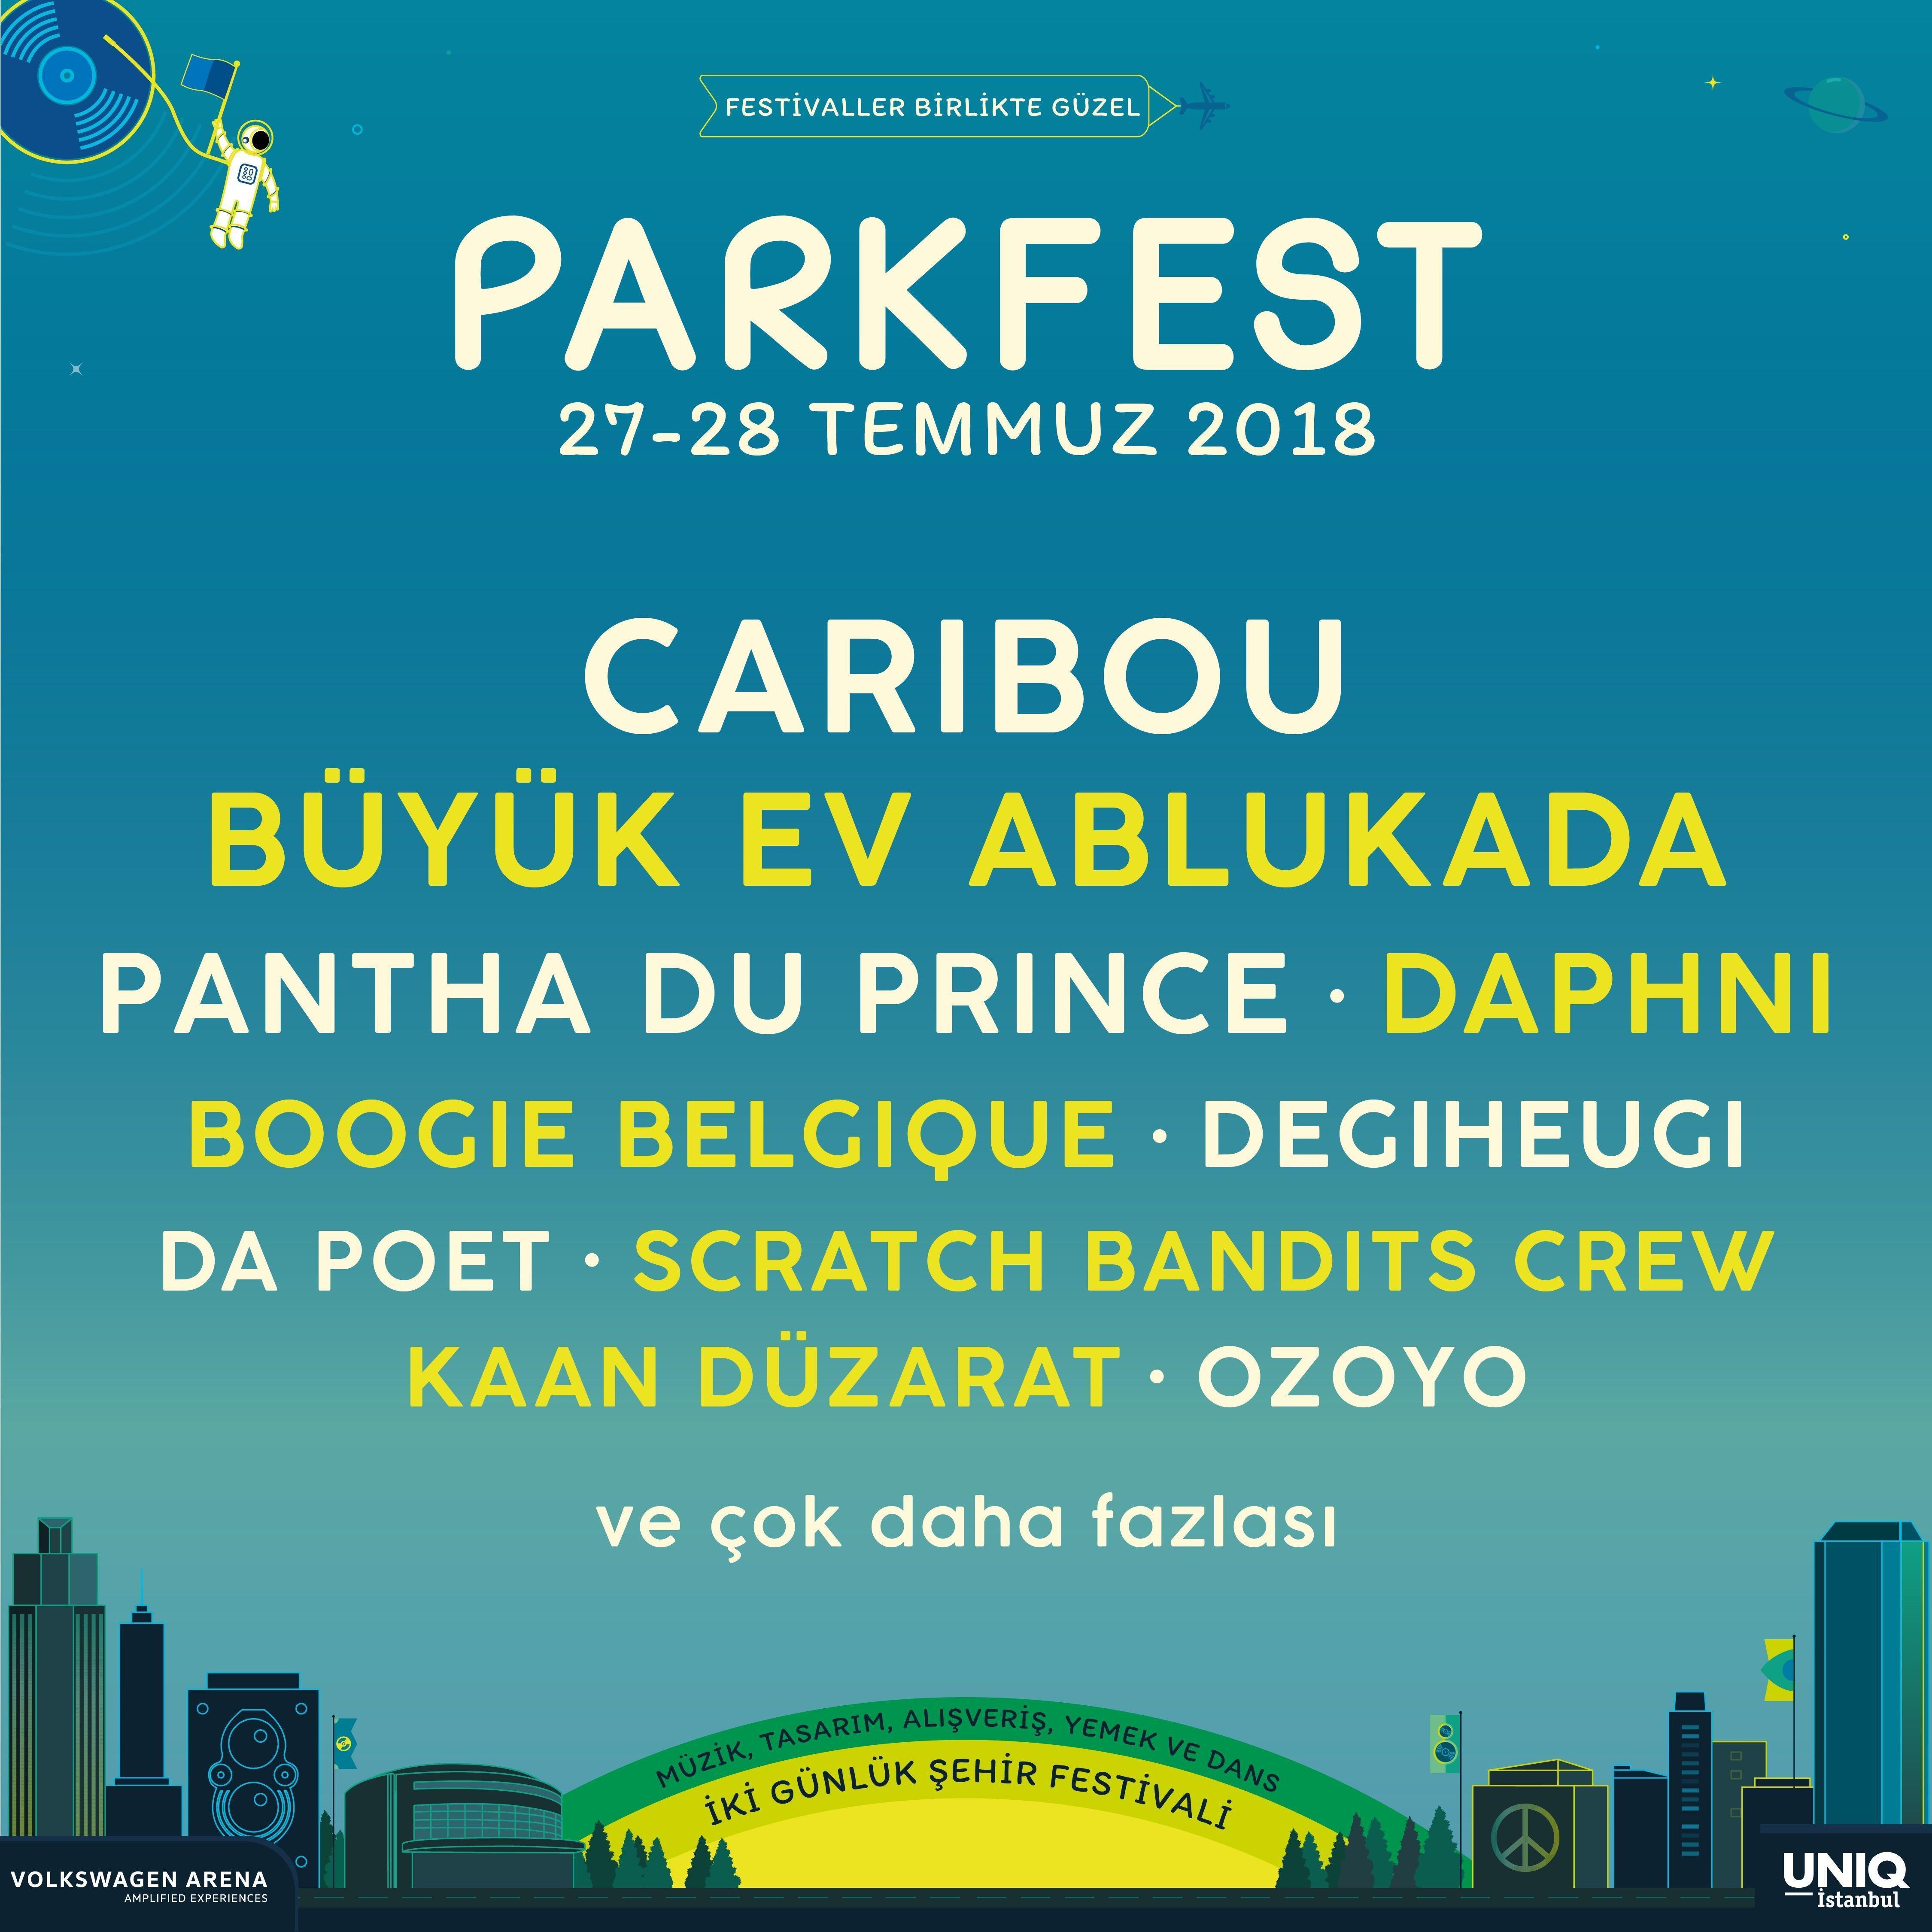 Parkfest 27-28 Temmuzda Uniq İstanbul ve Volkswagen Arenada